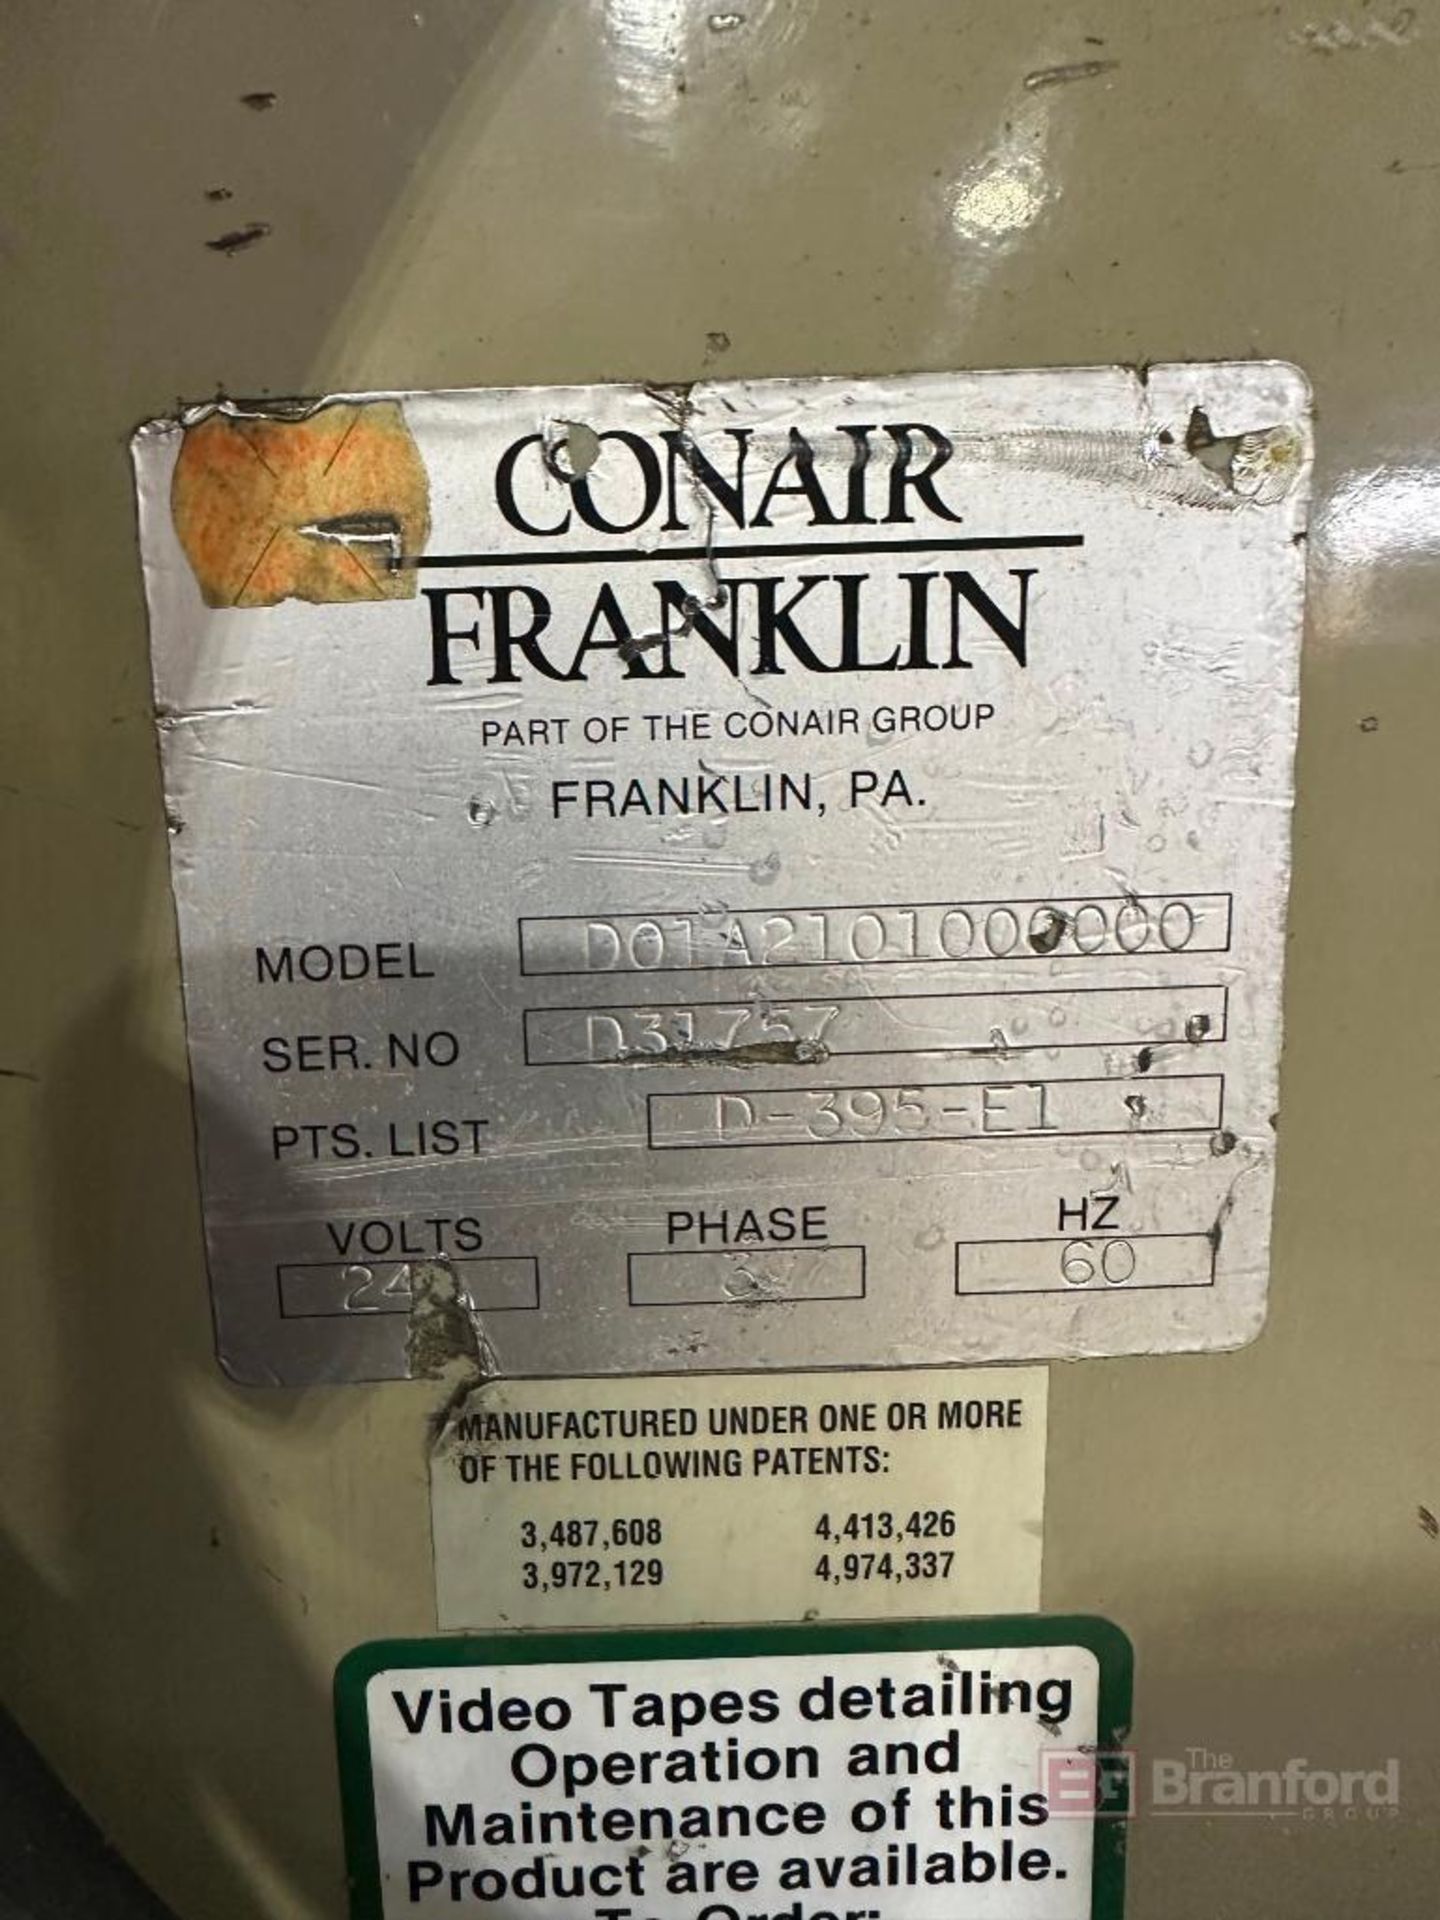 Conair/Franklin Model D01A210100000 Dryer - Image 5 of 5